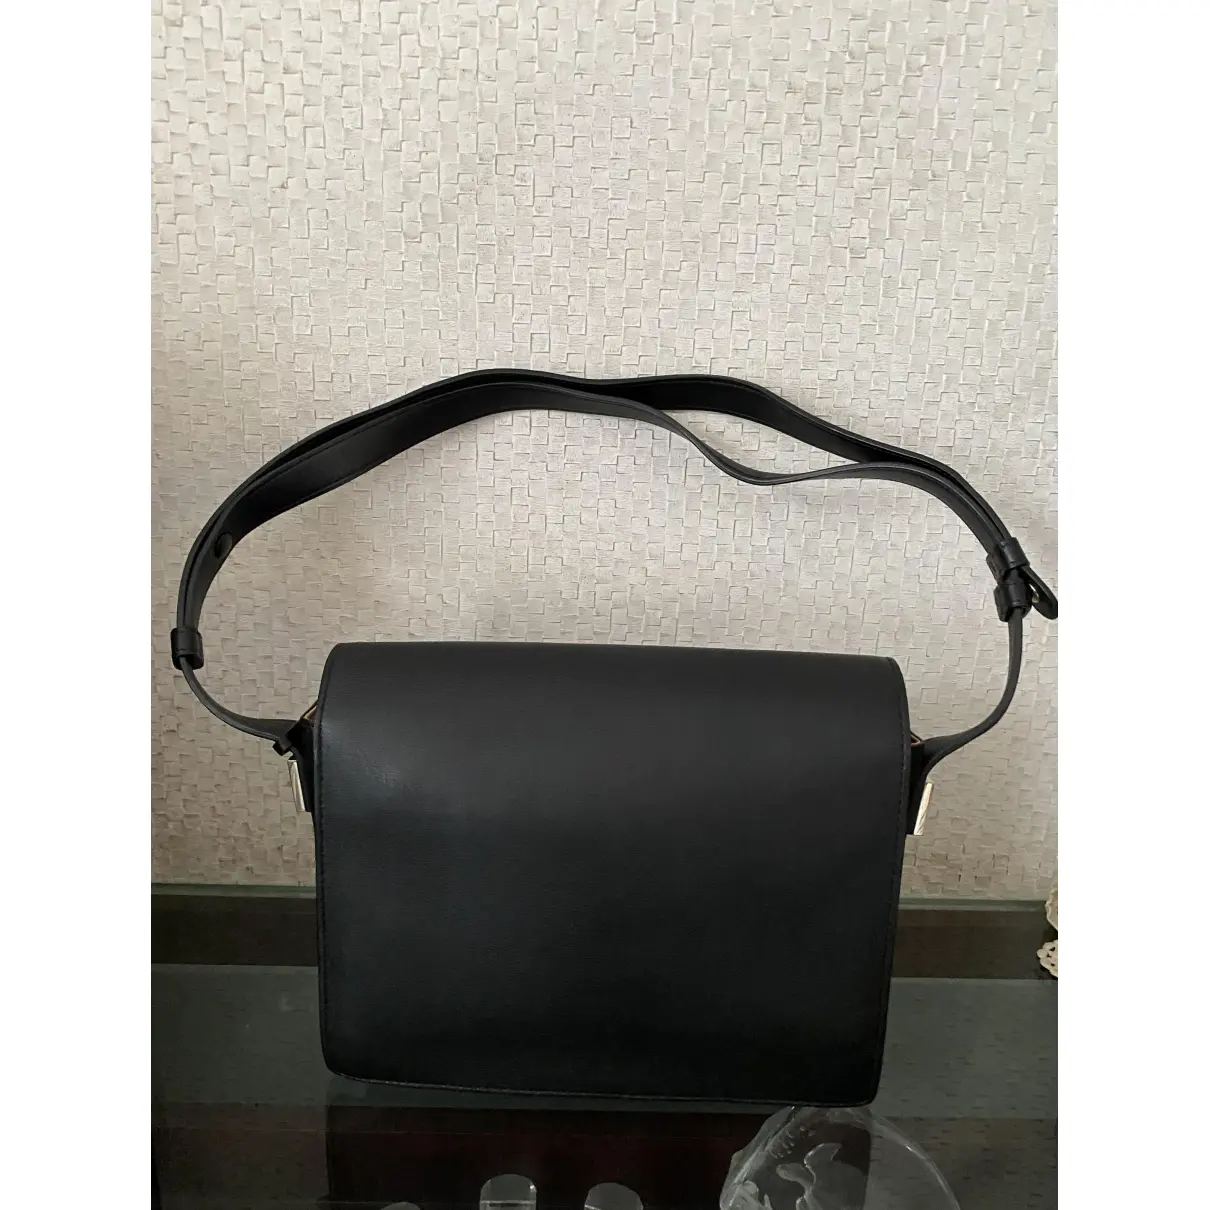 Buy Delvaux Madame leather handbag online